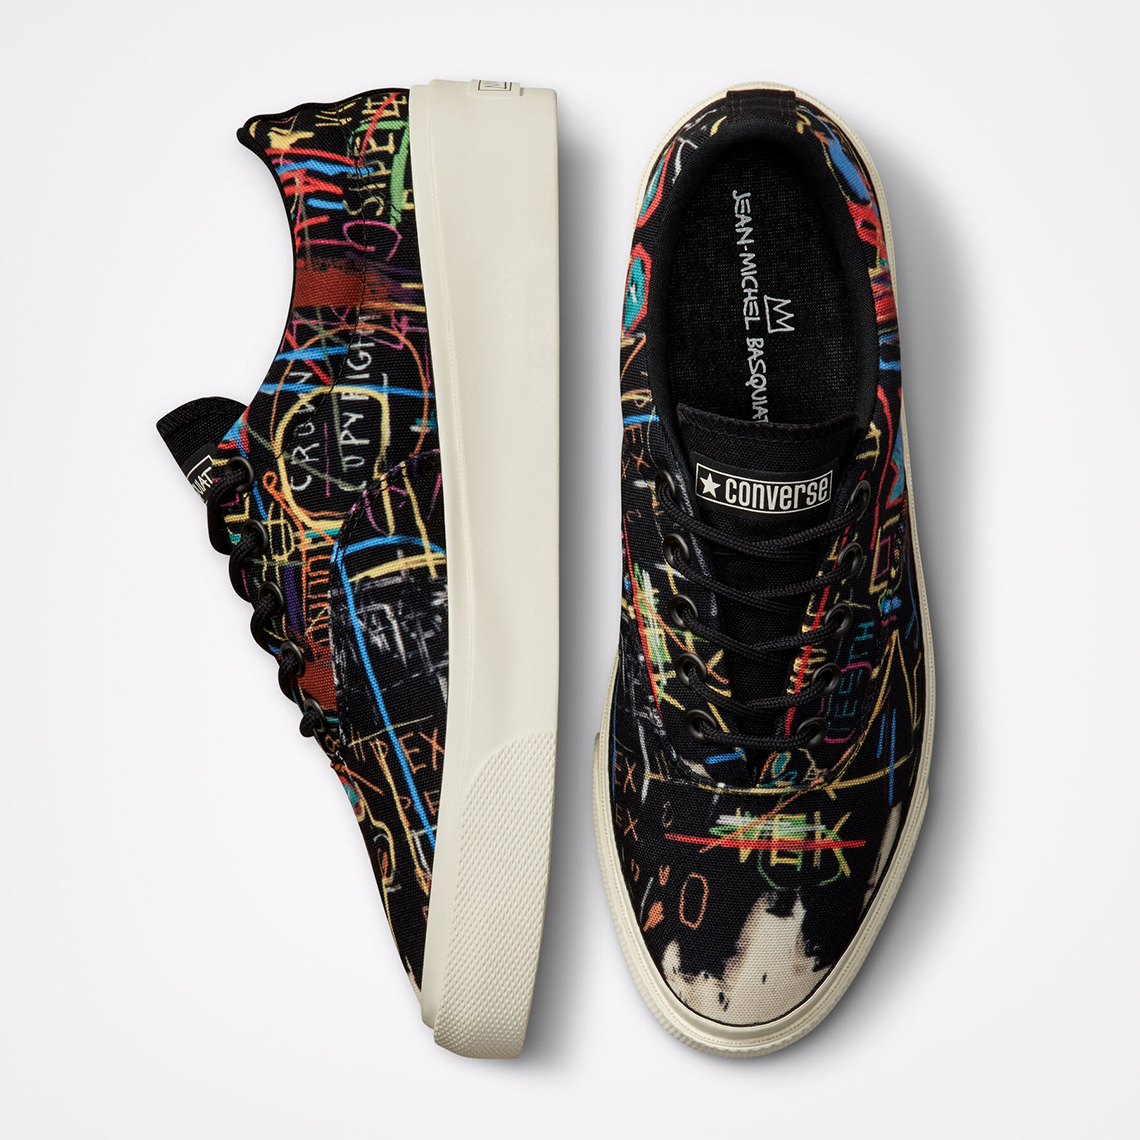 Basquiat Converse suede Skidgrip 172584c Release Date 2